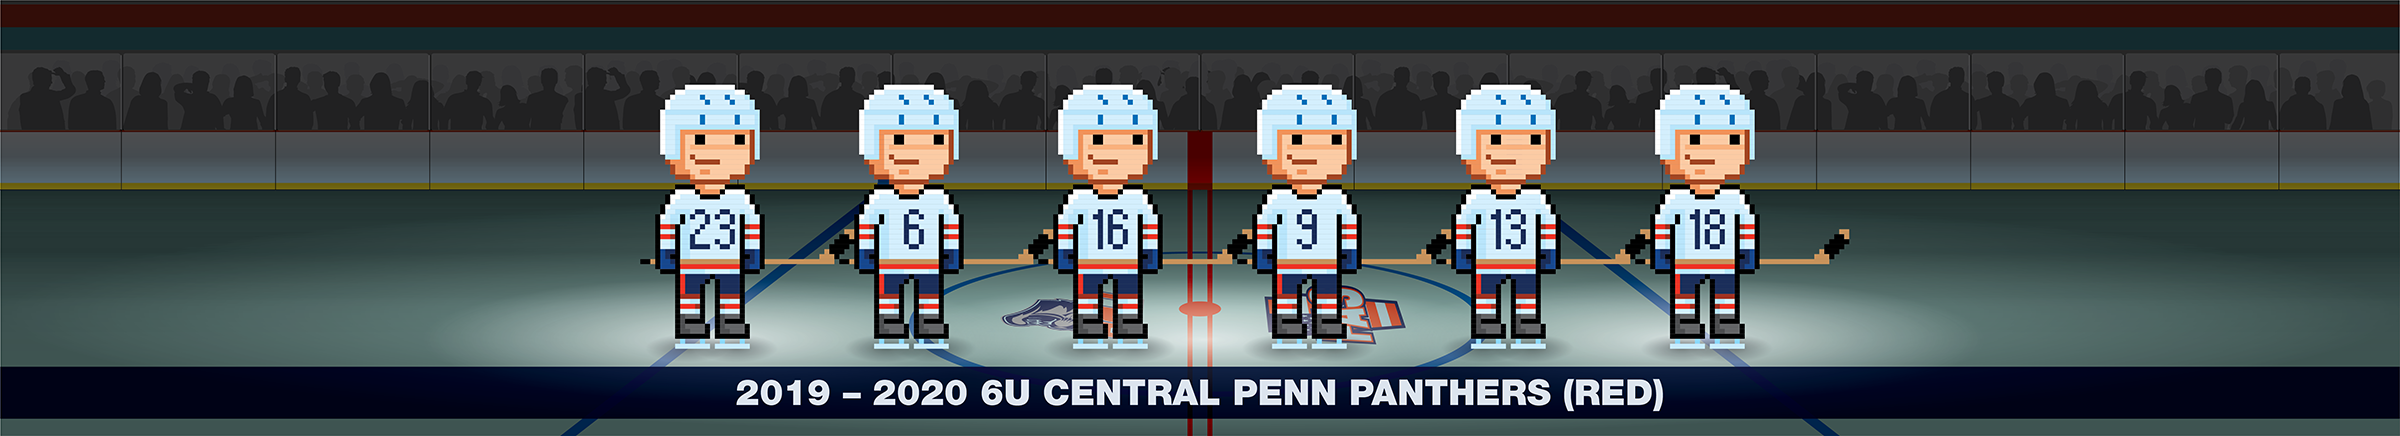 2019 – 20 Central Penn Panthers 6U